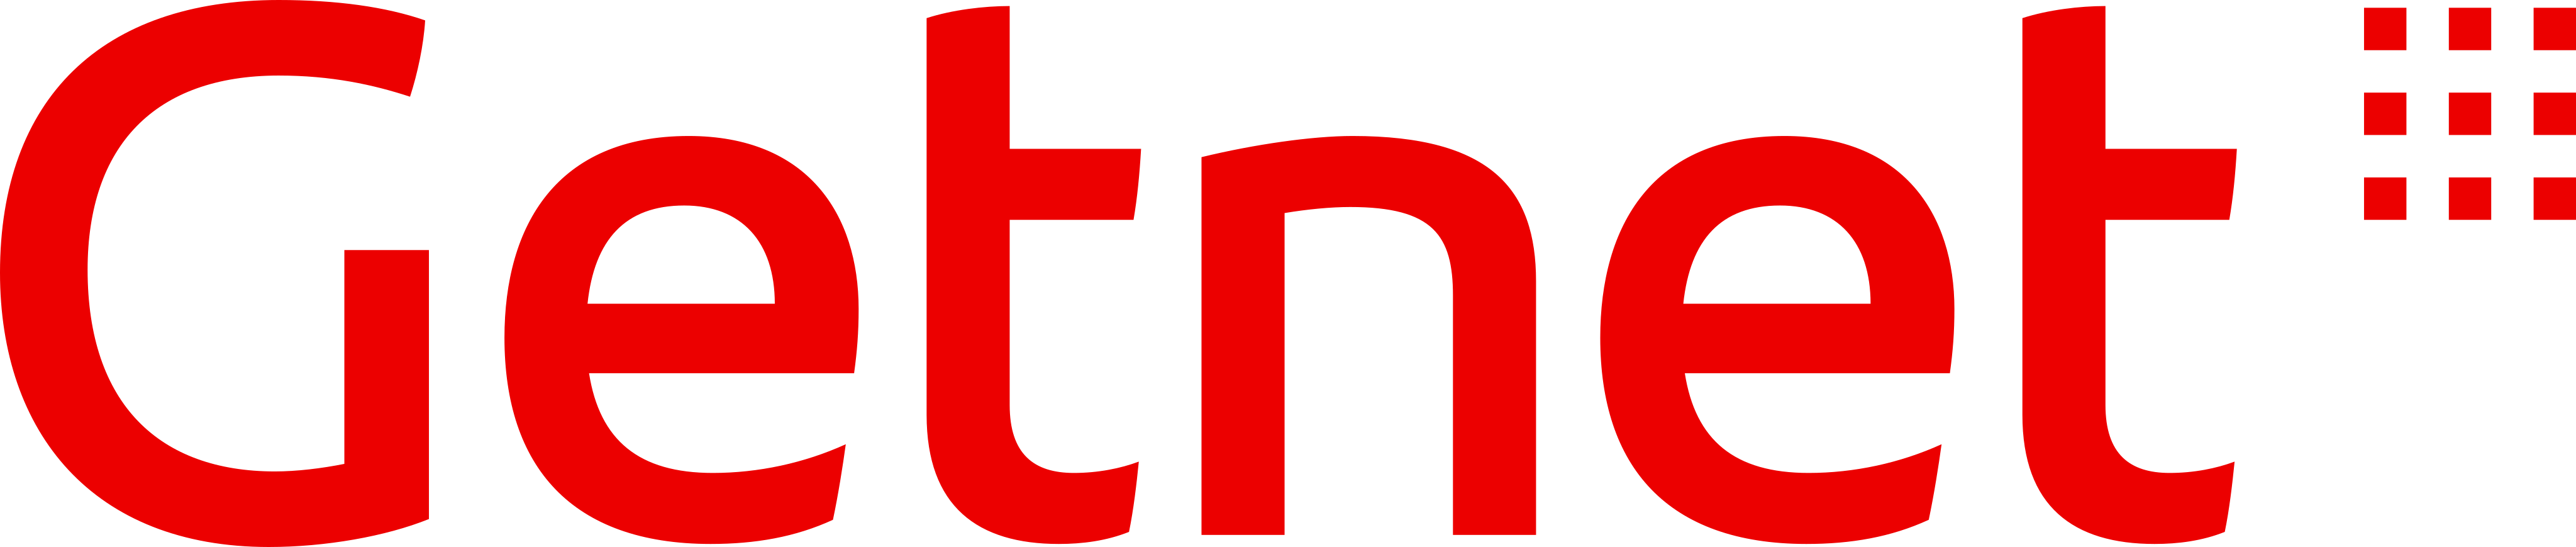 getnet-logo-4-2